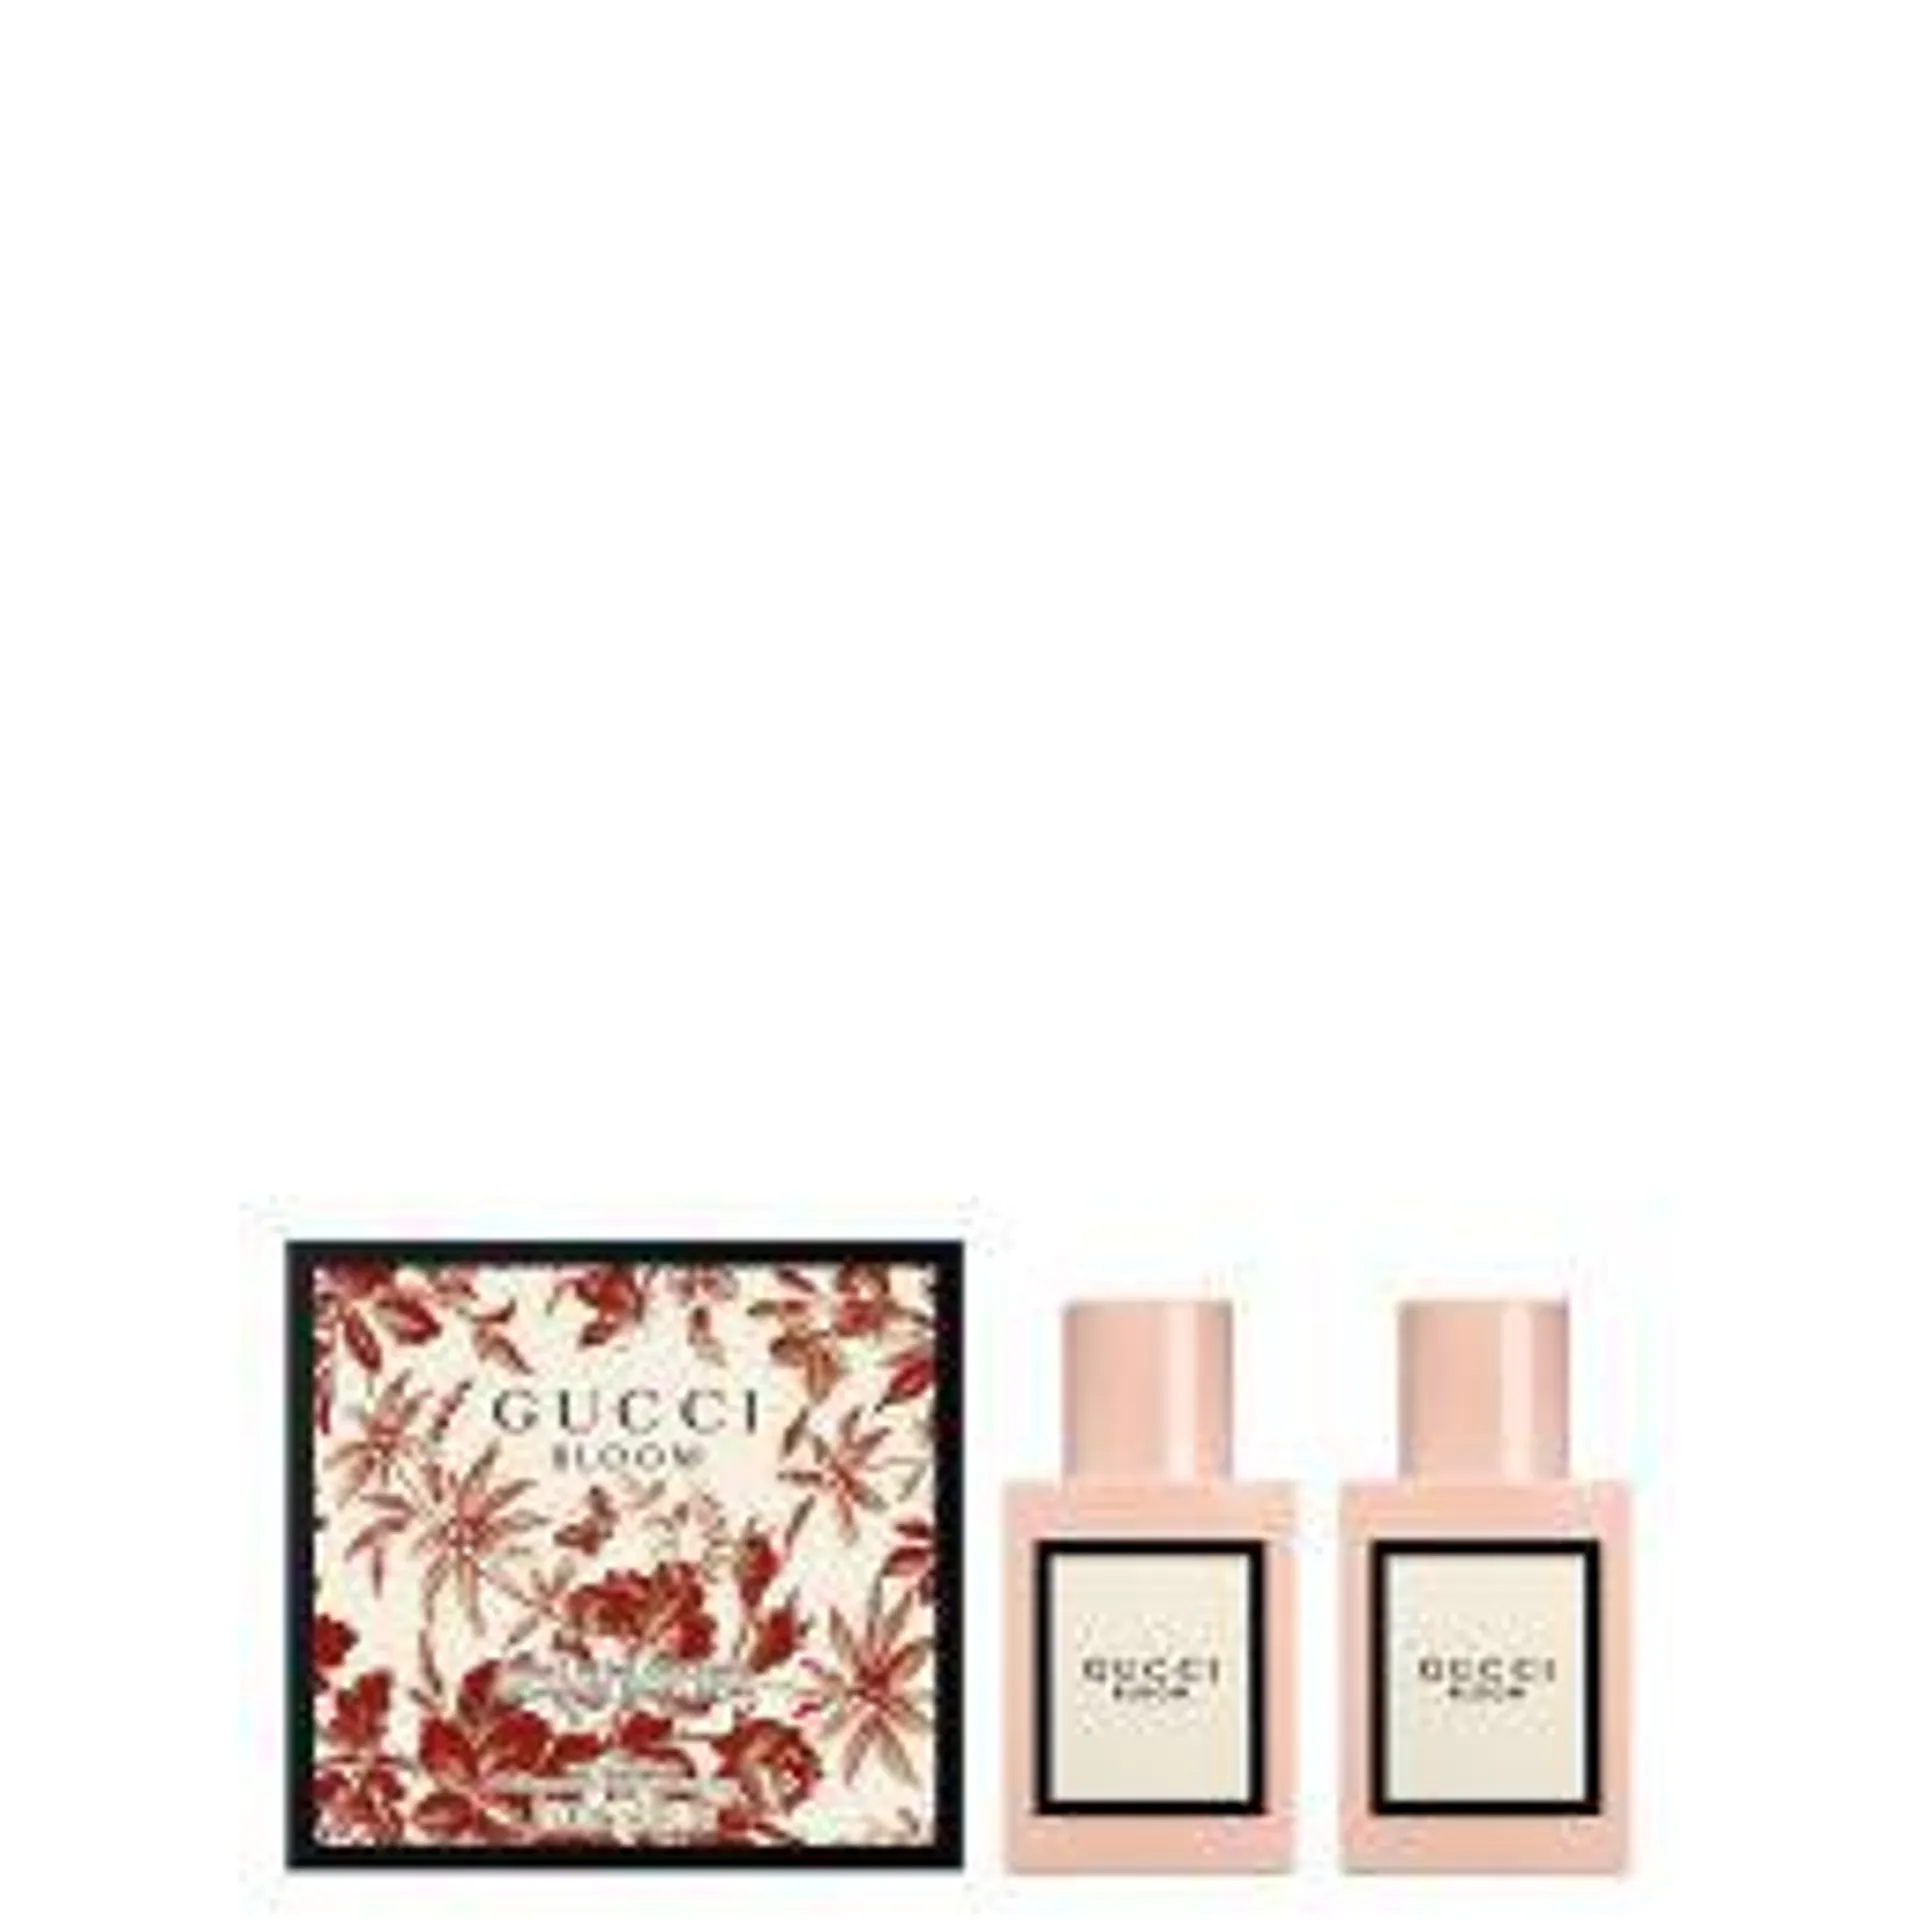 Bloom Duo Travel Set Sp23 2x30ml Eau de Parfum Spray